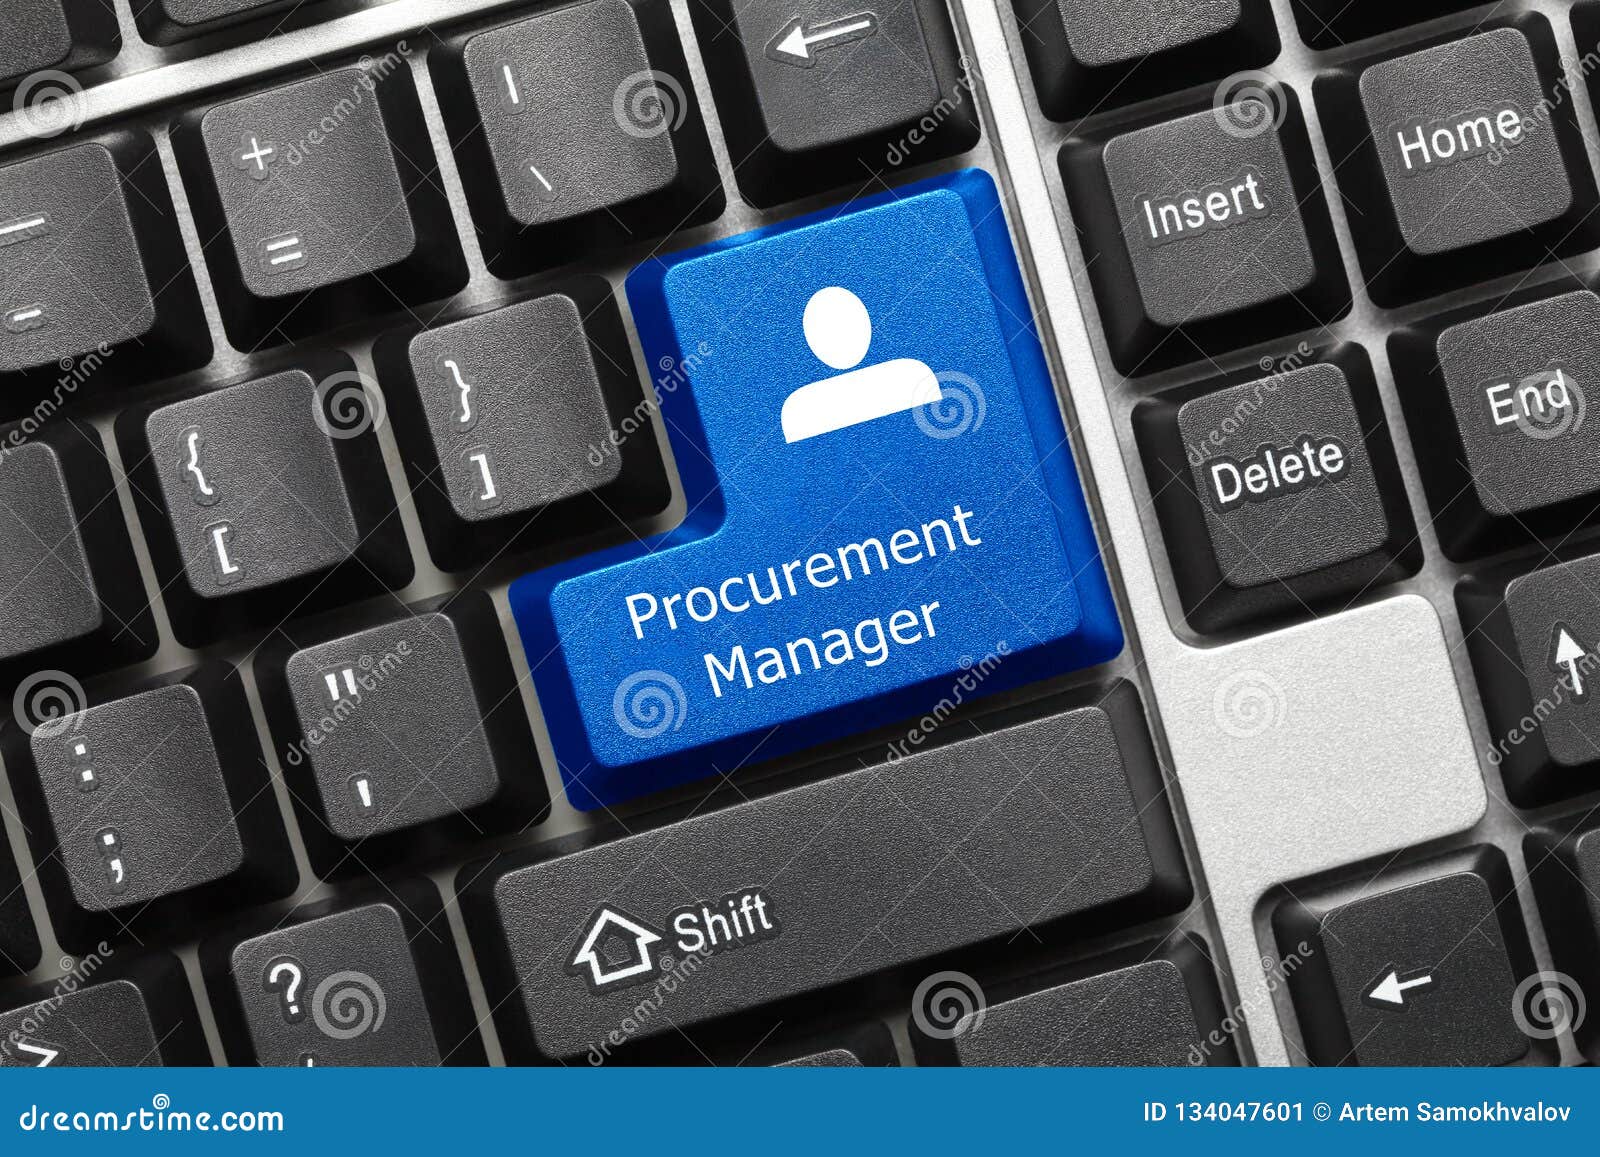 conceptual keyboard - procurement manager blue key